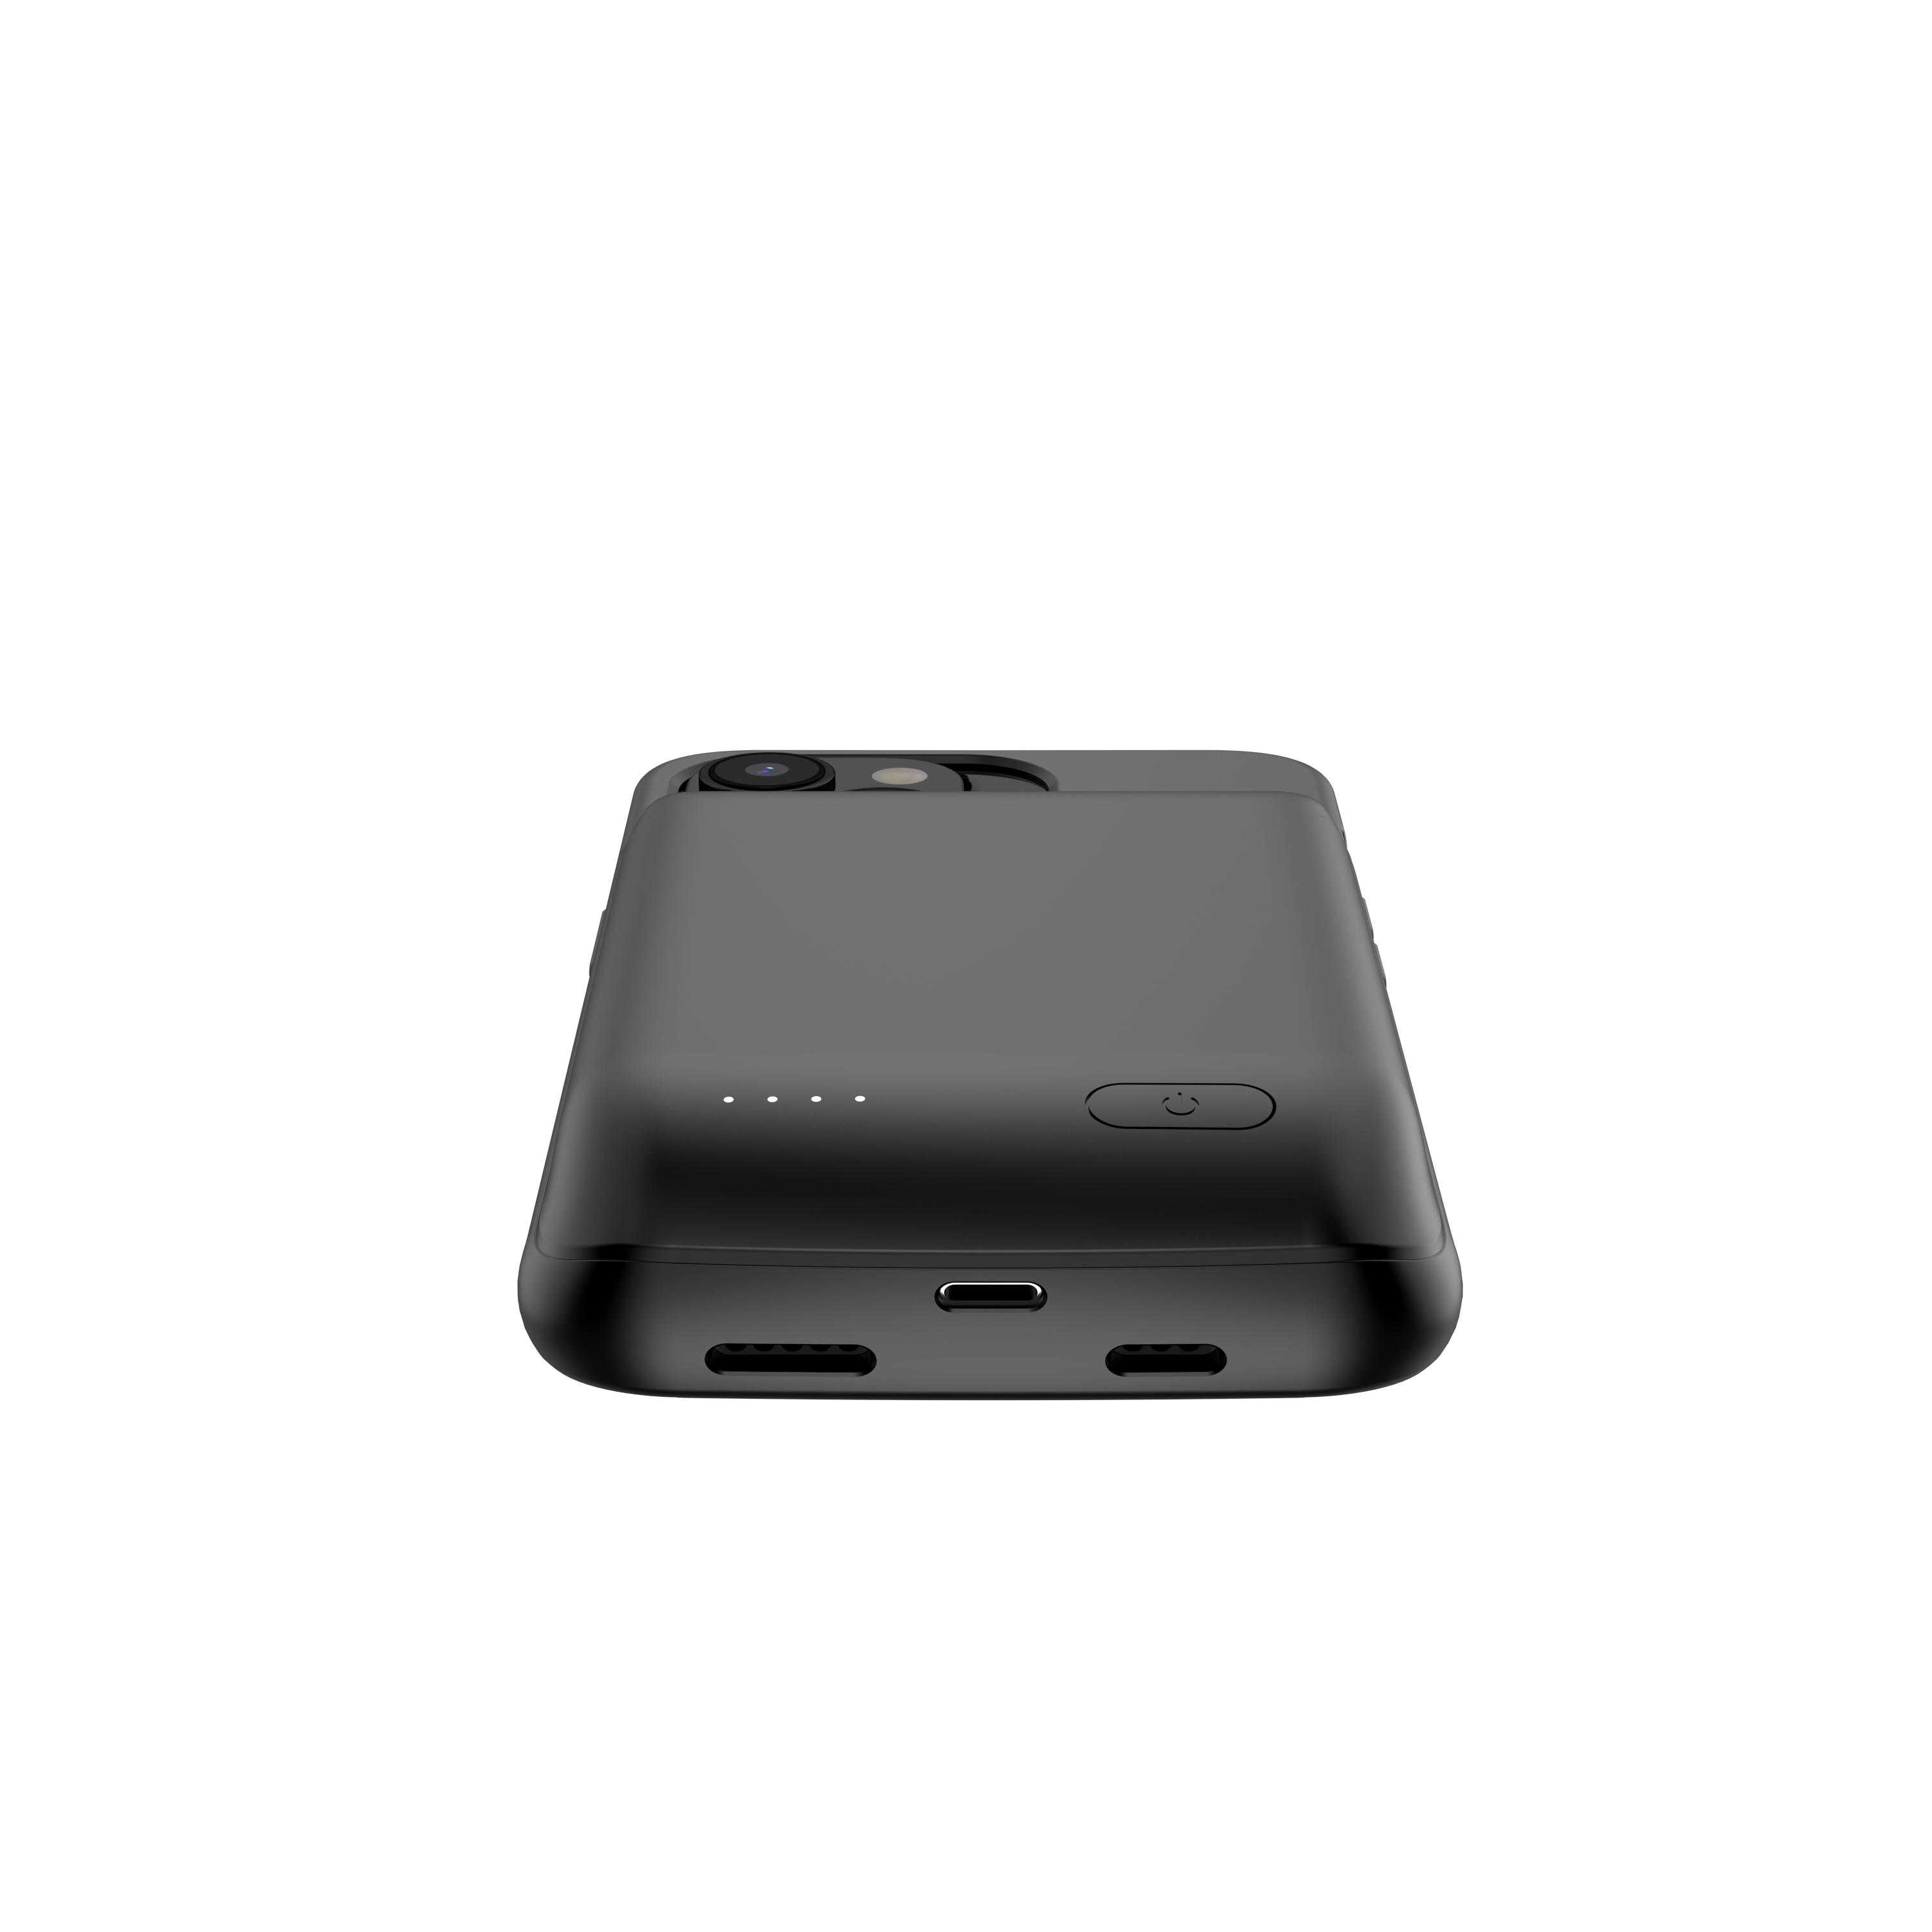 iPhone 12 Pro Max Battery Case 10000mAh